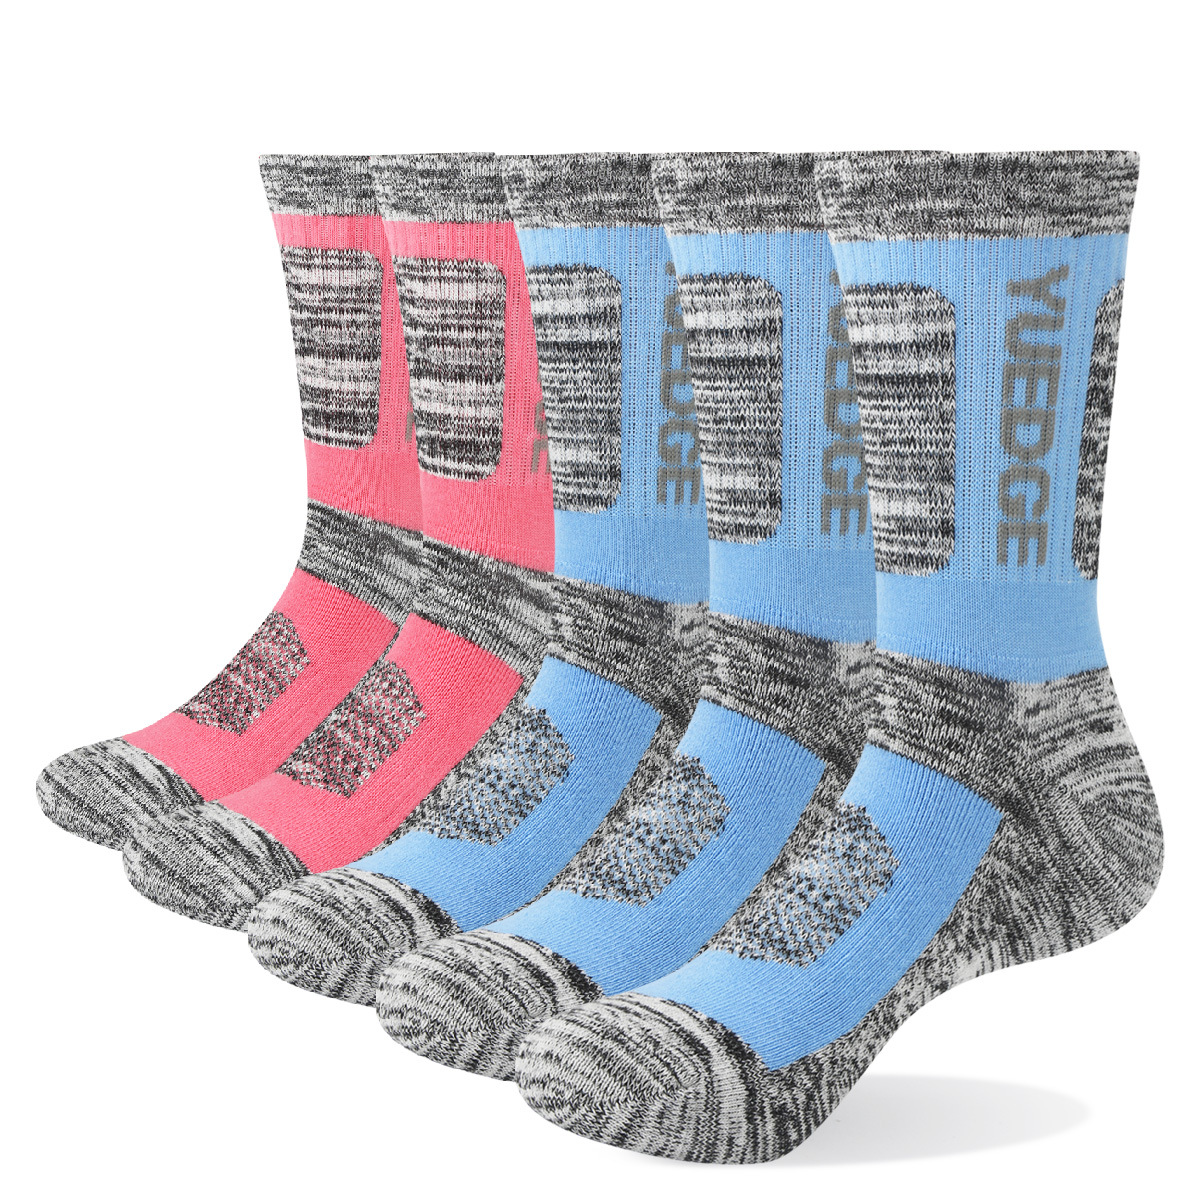 YUEDGE 5 Pairs Travel Professional Sports Socks Riding Barrel Bottom Combed Cotton Terry Socks Hiking Socks